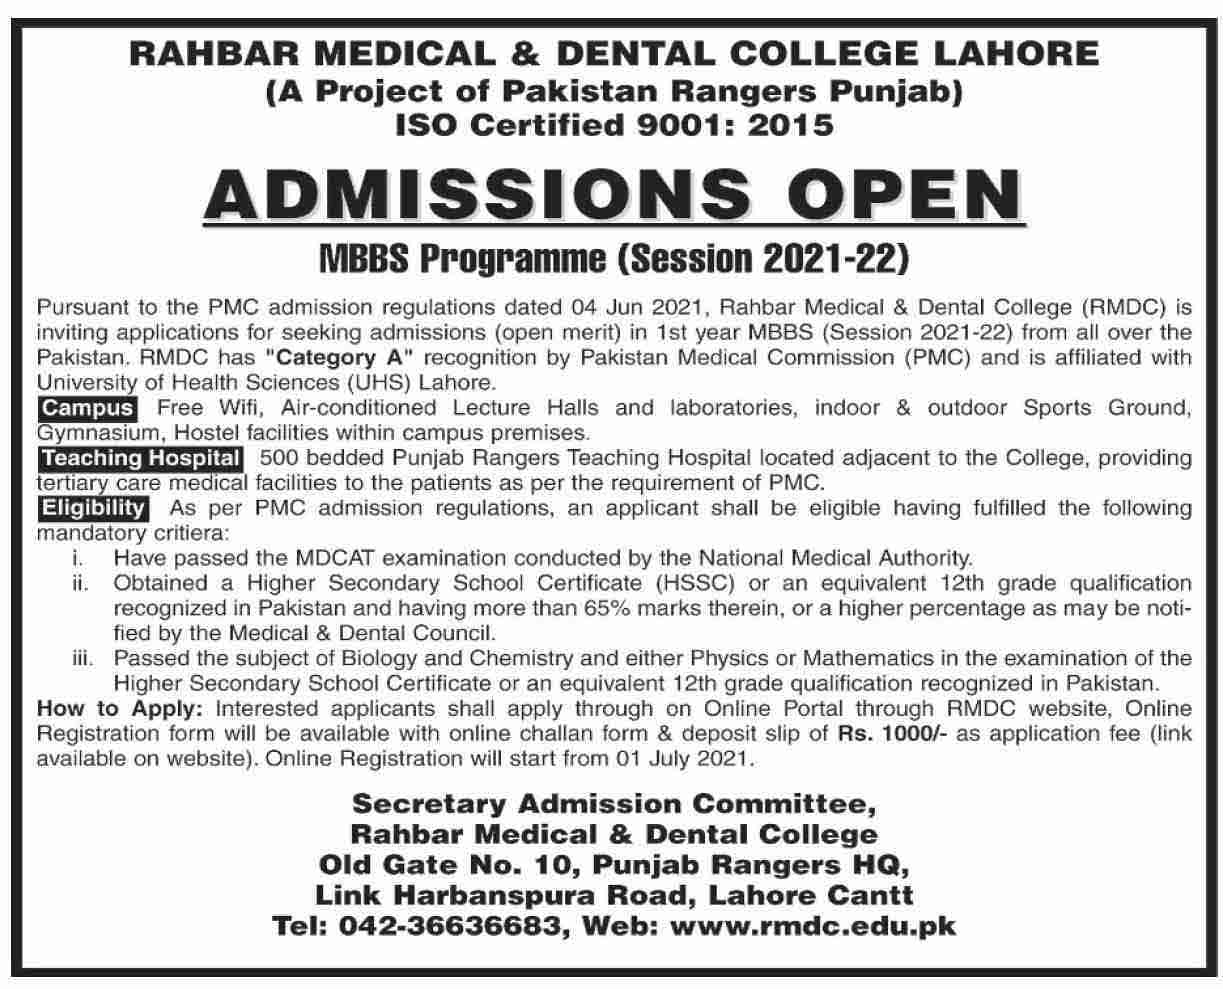 Rahbar-Medical-&-Dental-College-Admission-2021